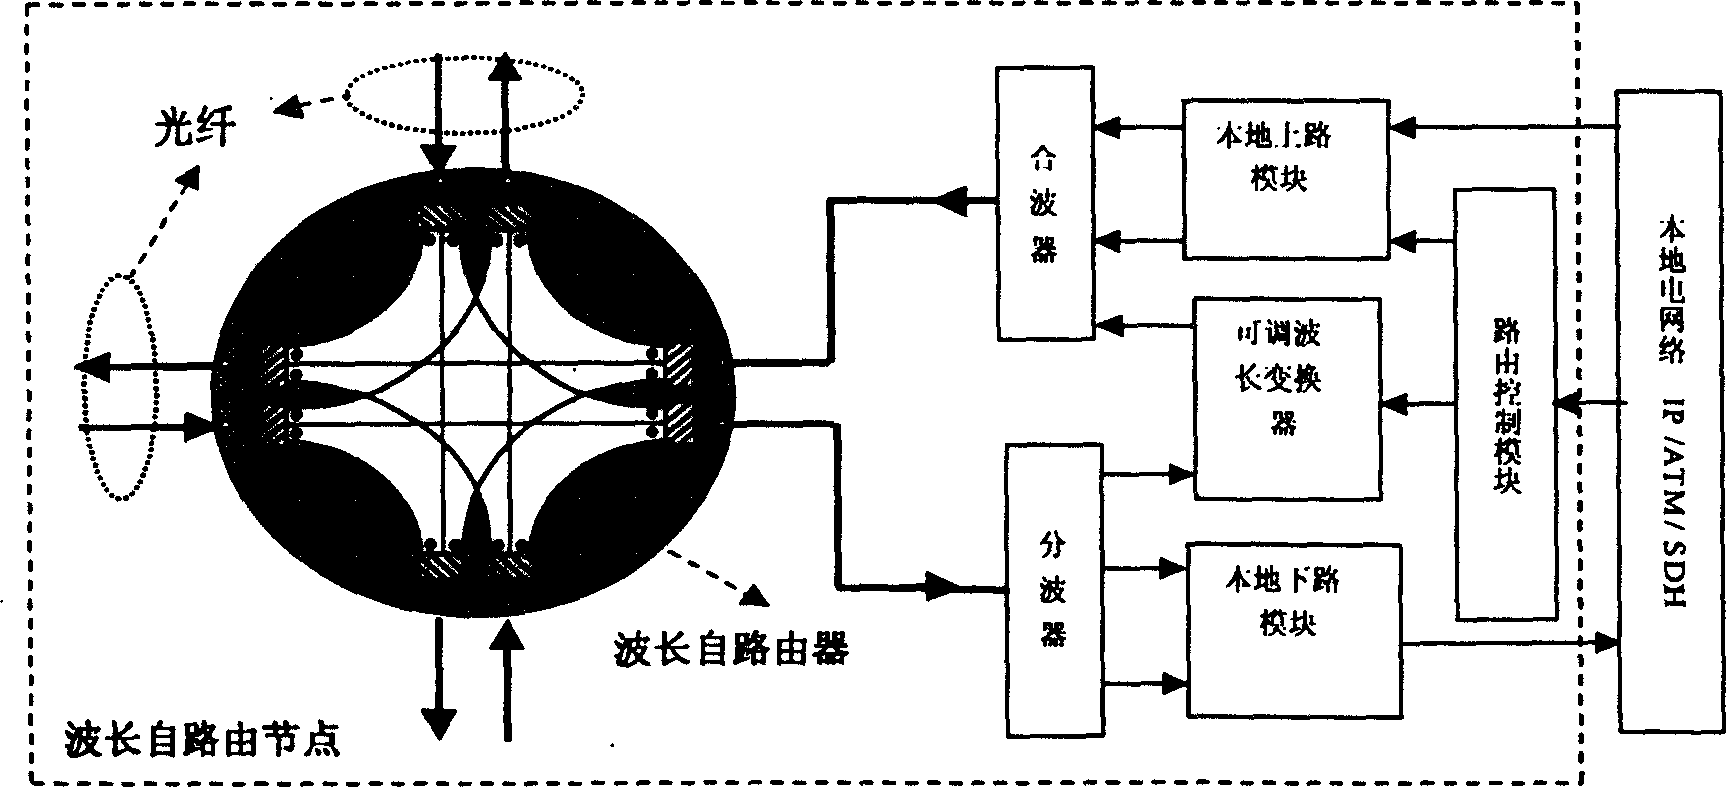 Node structure of light transmission network based on adjustable wavelength shifter and wavelength self-router